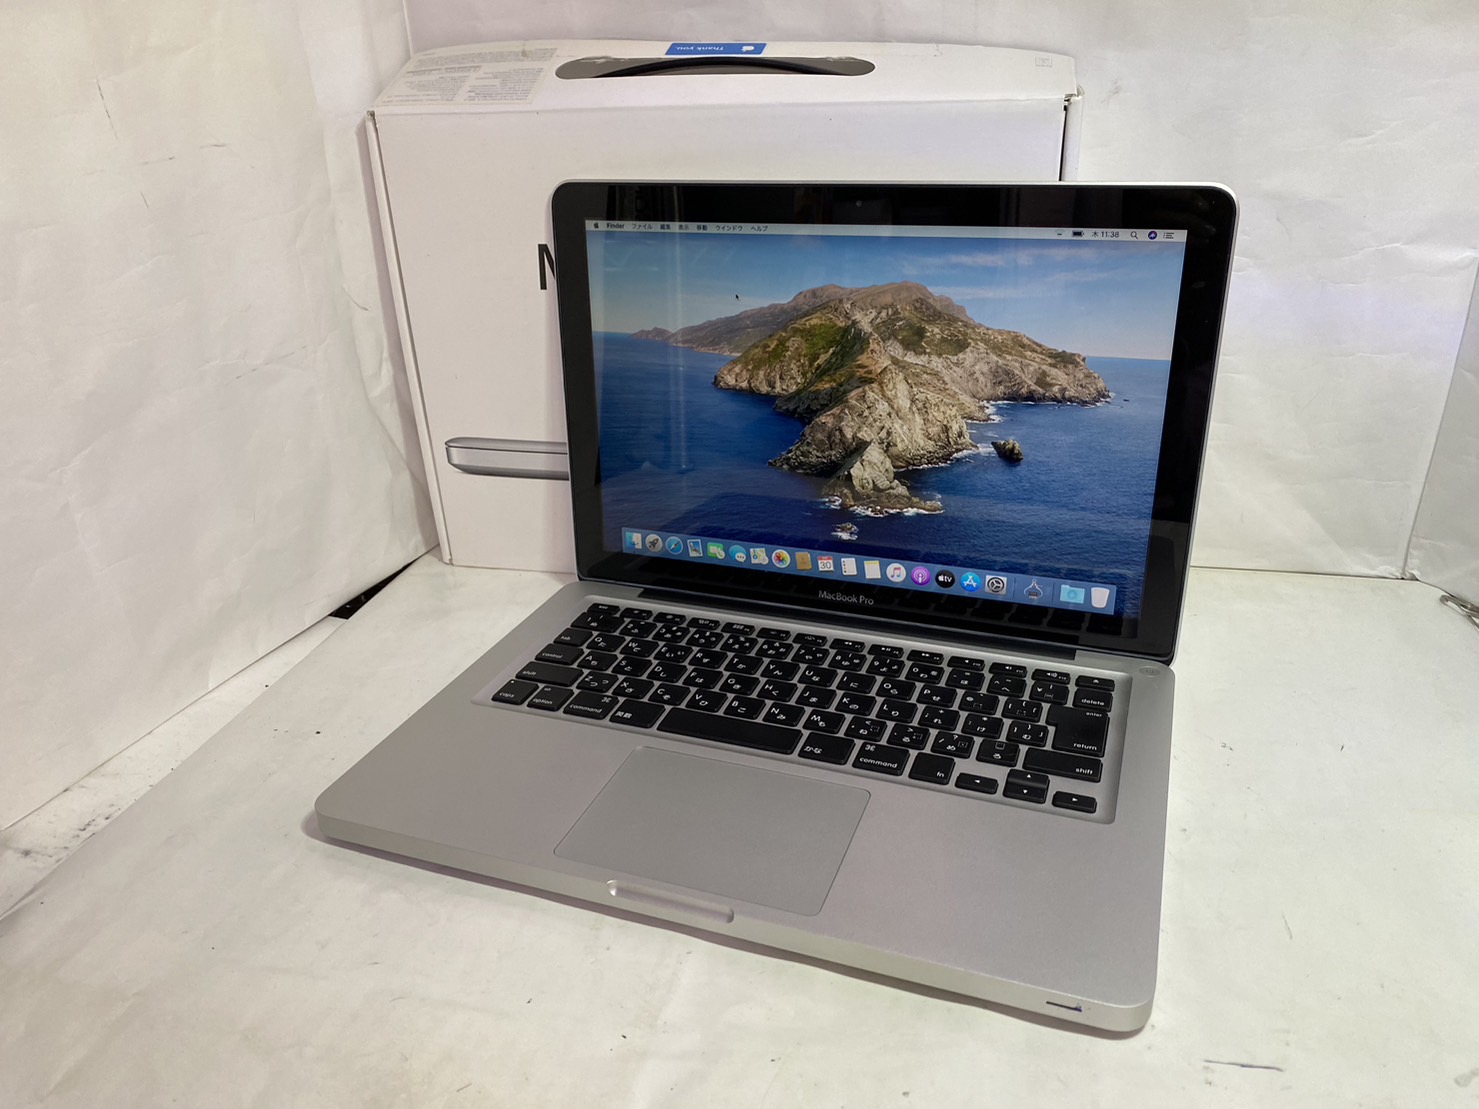 APPLE(アップル) MacBook Pro (13-inch, Mid 2012) A1278